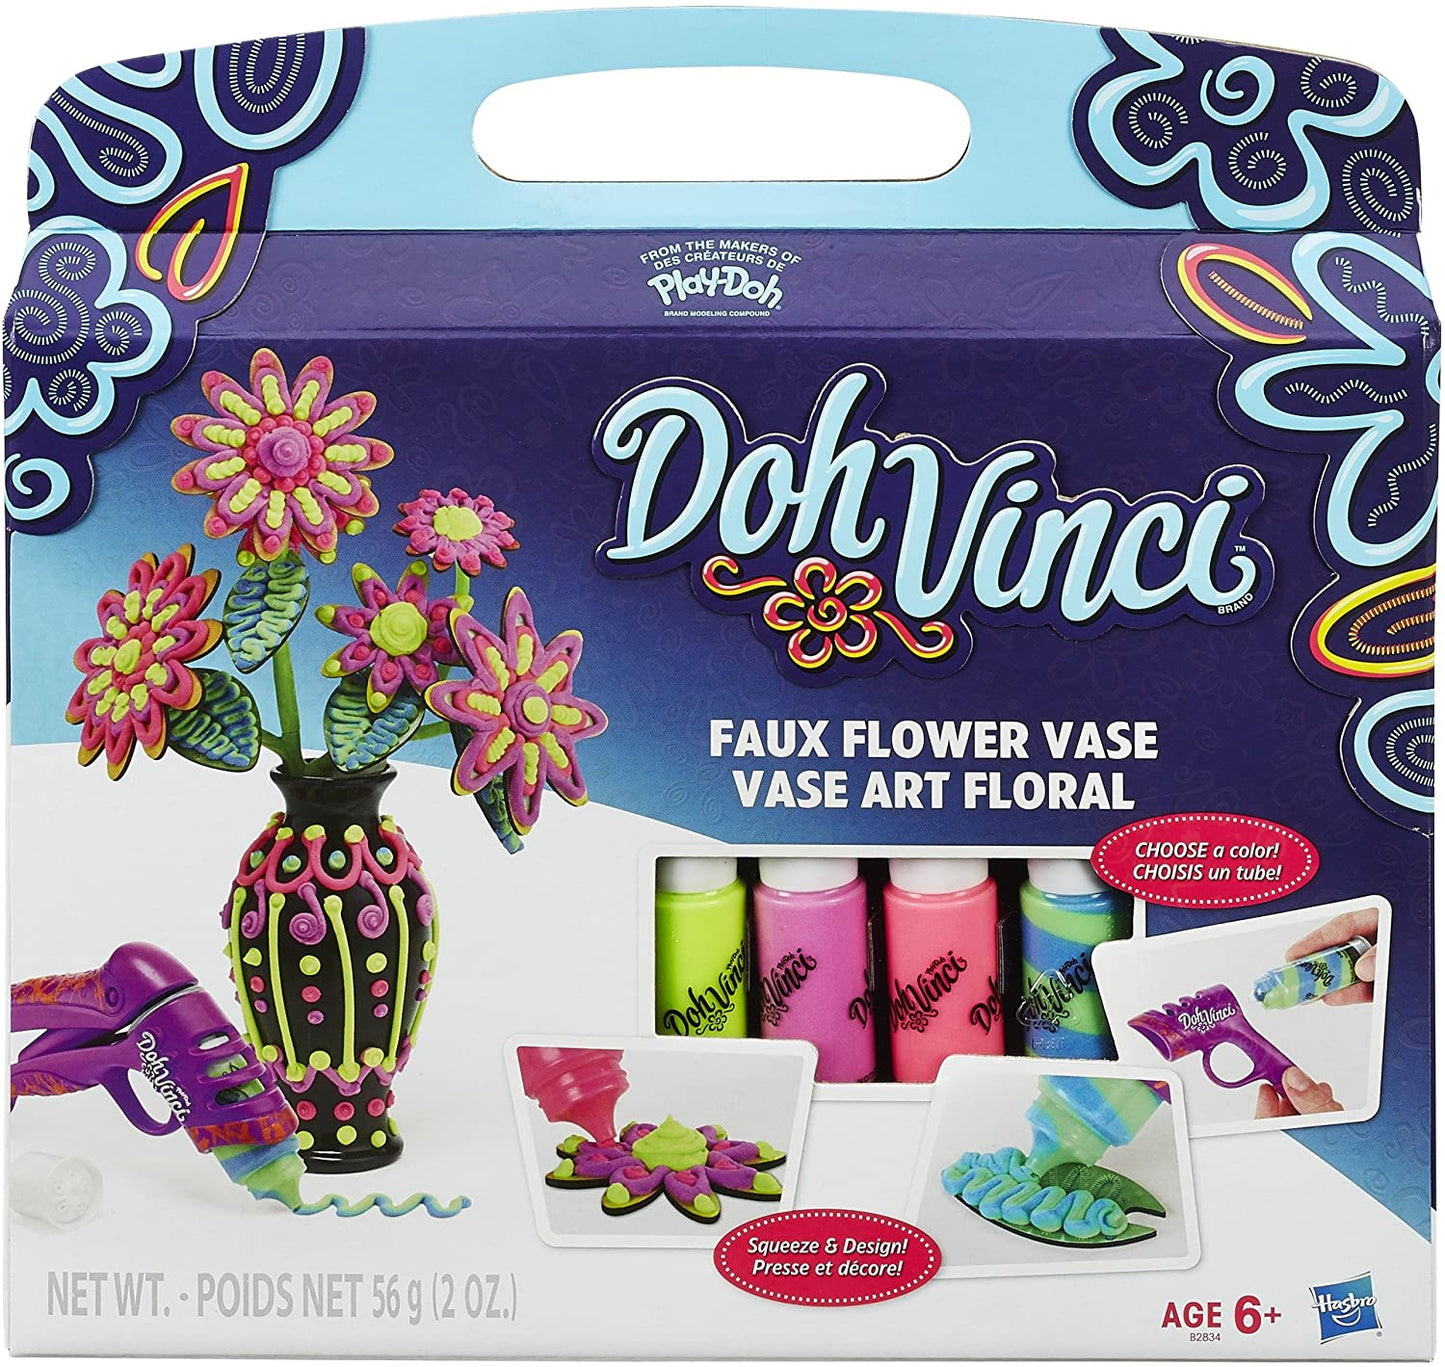 DohVinci Faux Flower Vase Kit